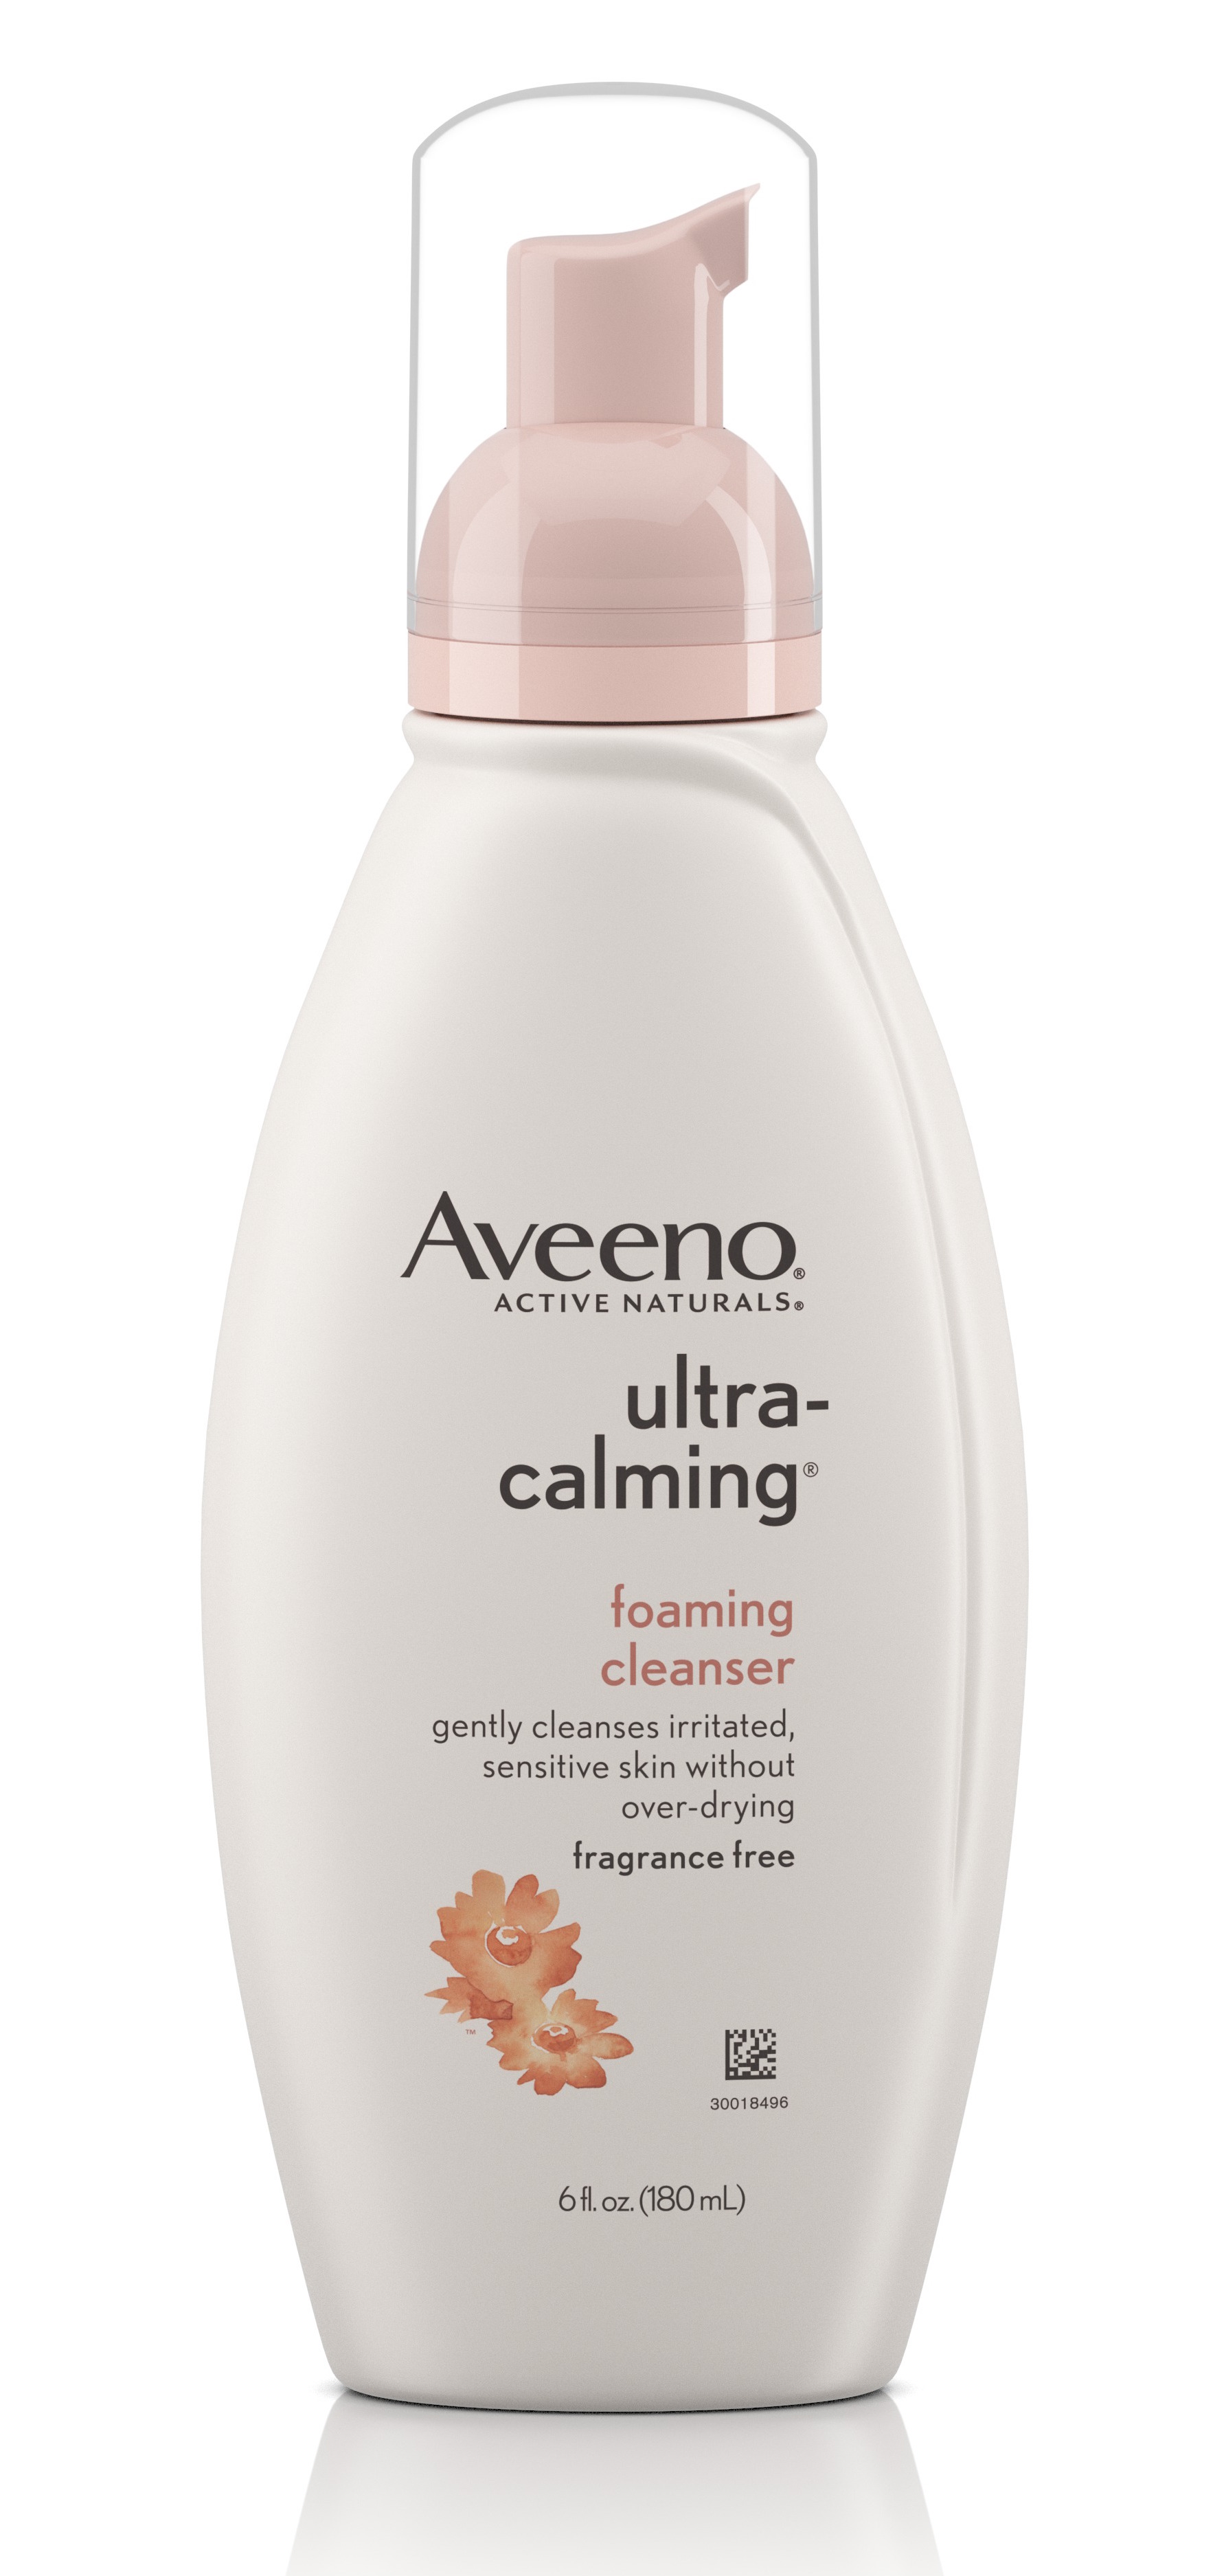 aveeno ultra-calming foaming cleanser for sensitive skin